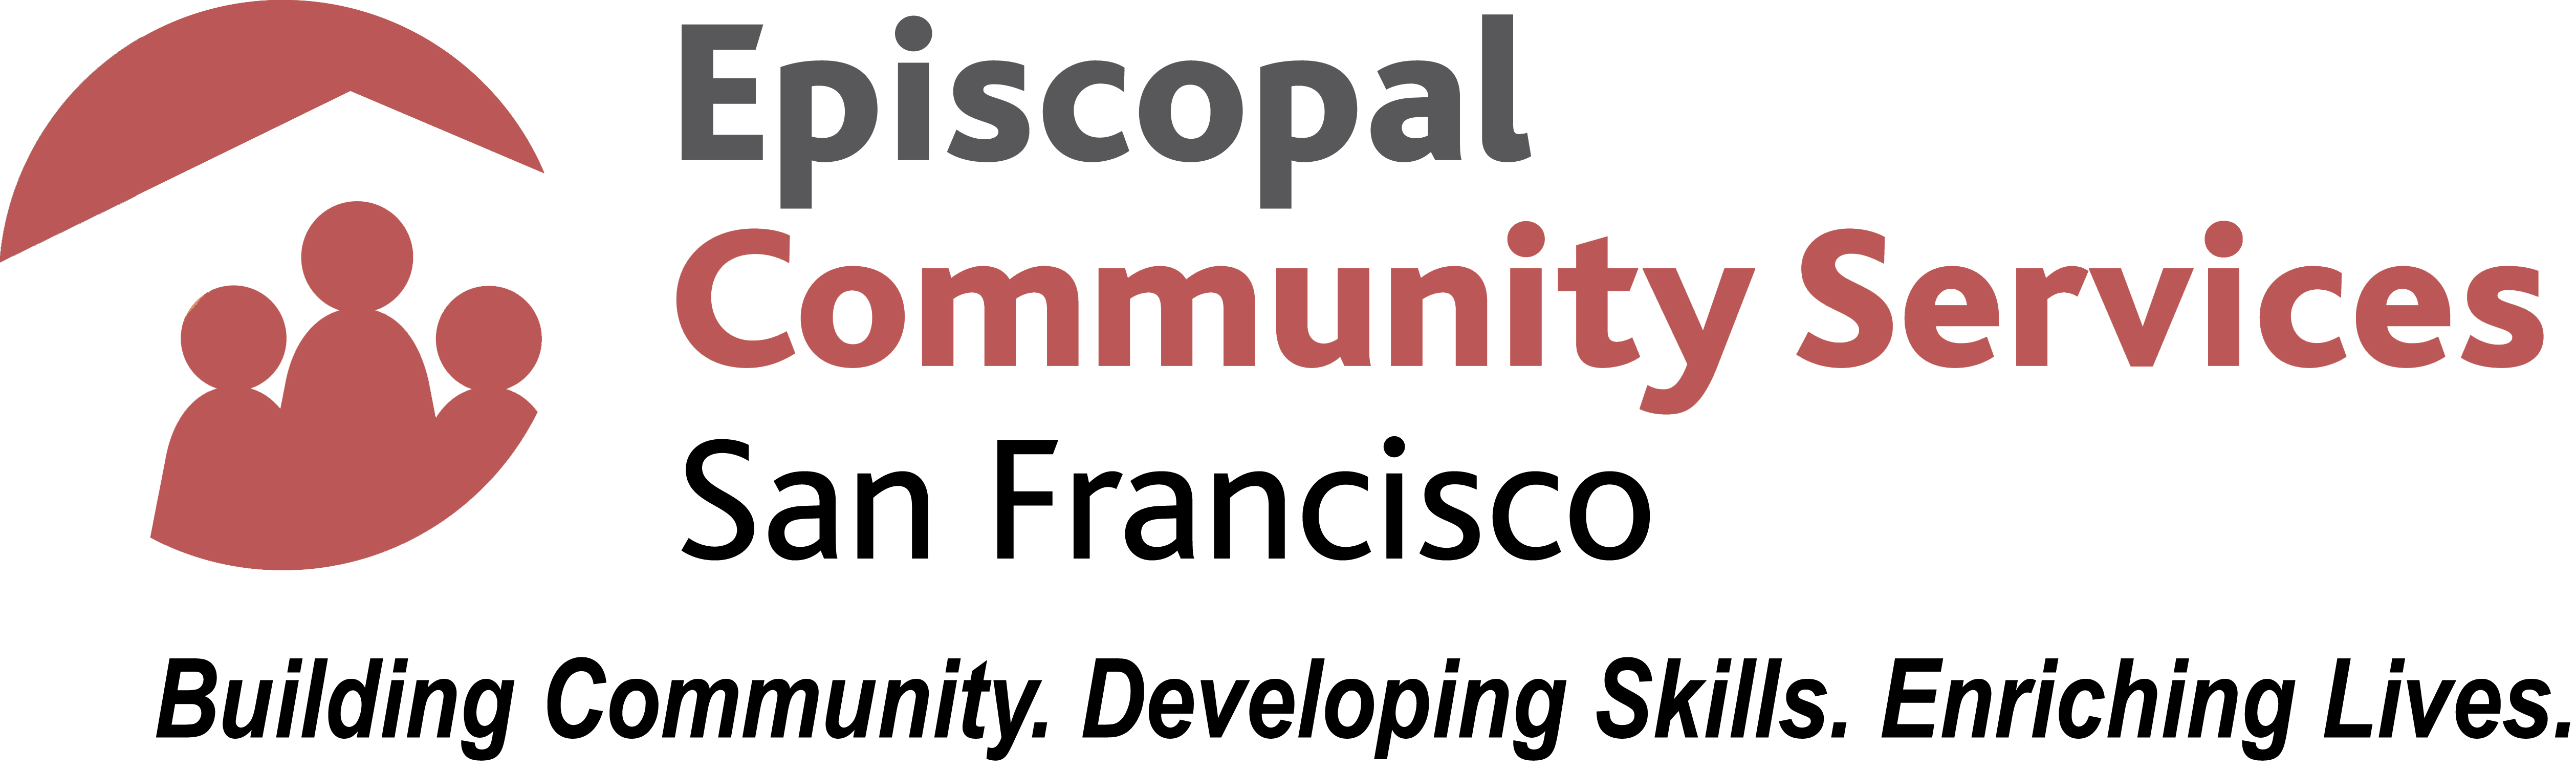 episcopal community services